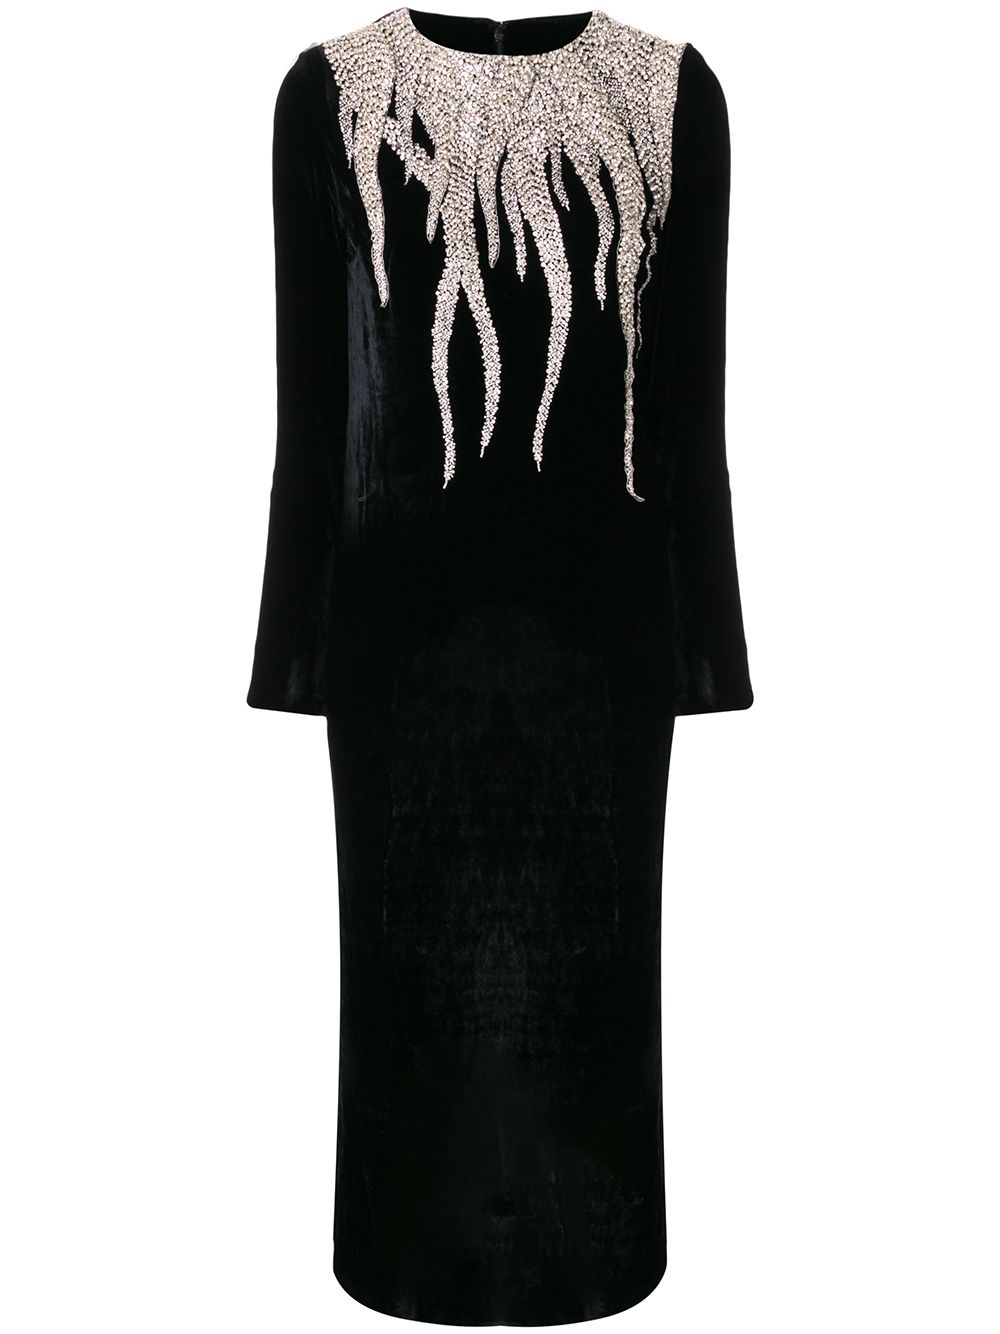 Christian Pellizzari Embroidery Strass Evening Dress In Black